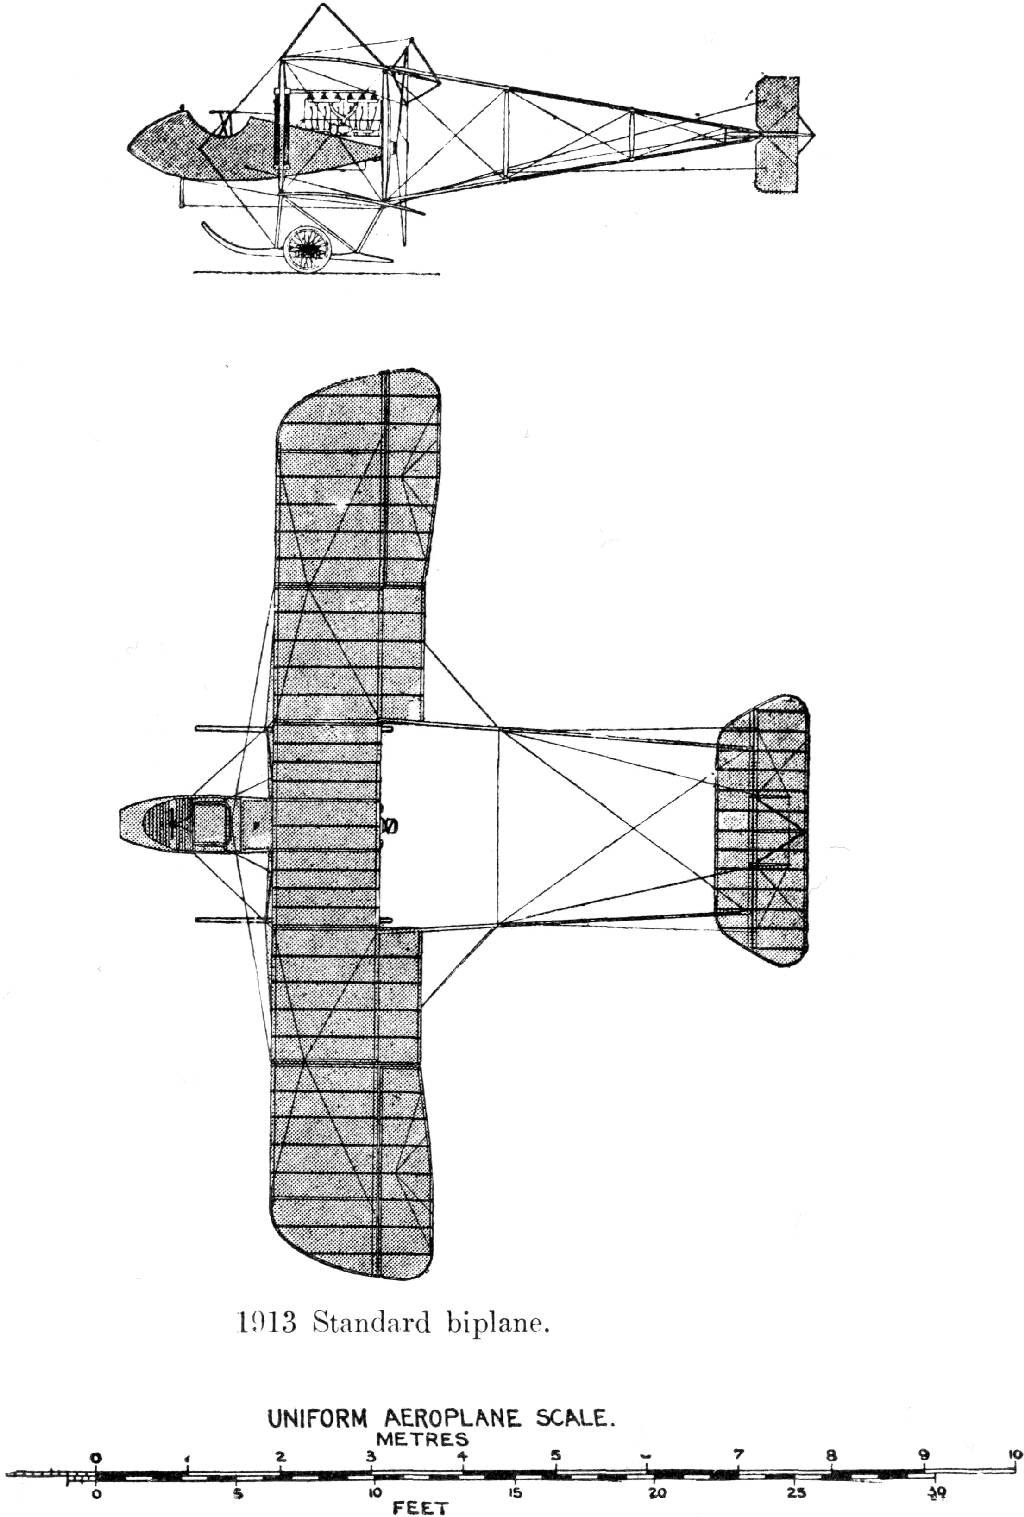 1913 Standard biplane. Uniform Aeroplane Scale